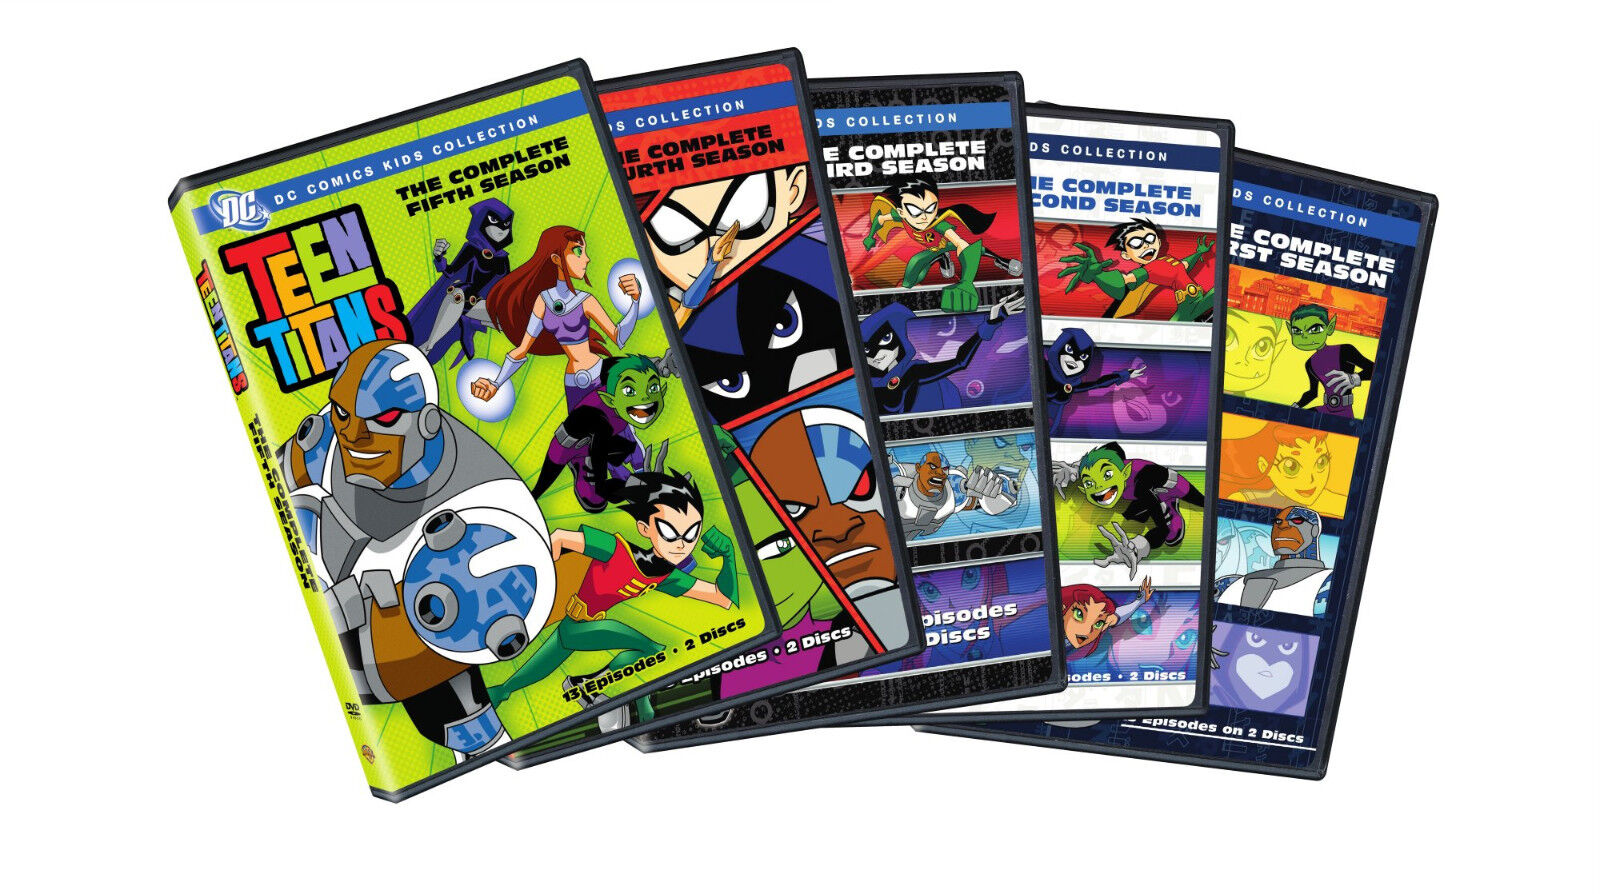 Aubergine patroon stuiten op Teen Titans TV Series Complete Season 1-5 (1 2 3 4 5) BRAND NEW DVD SET  883929035236 | eBay